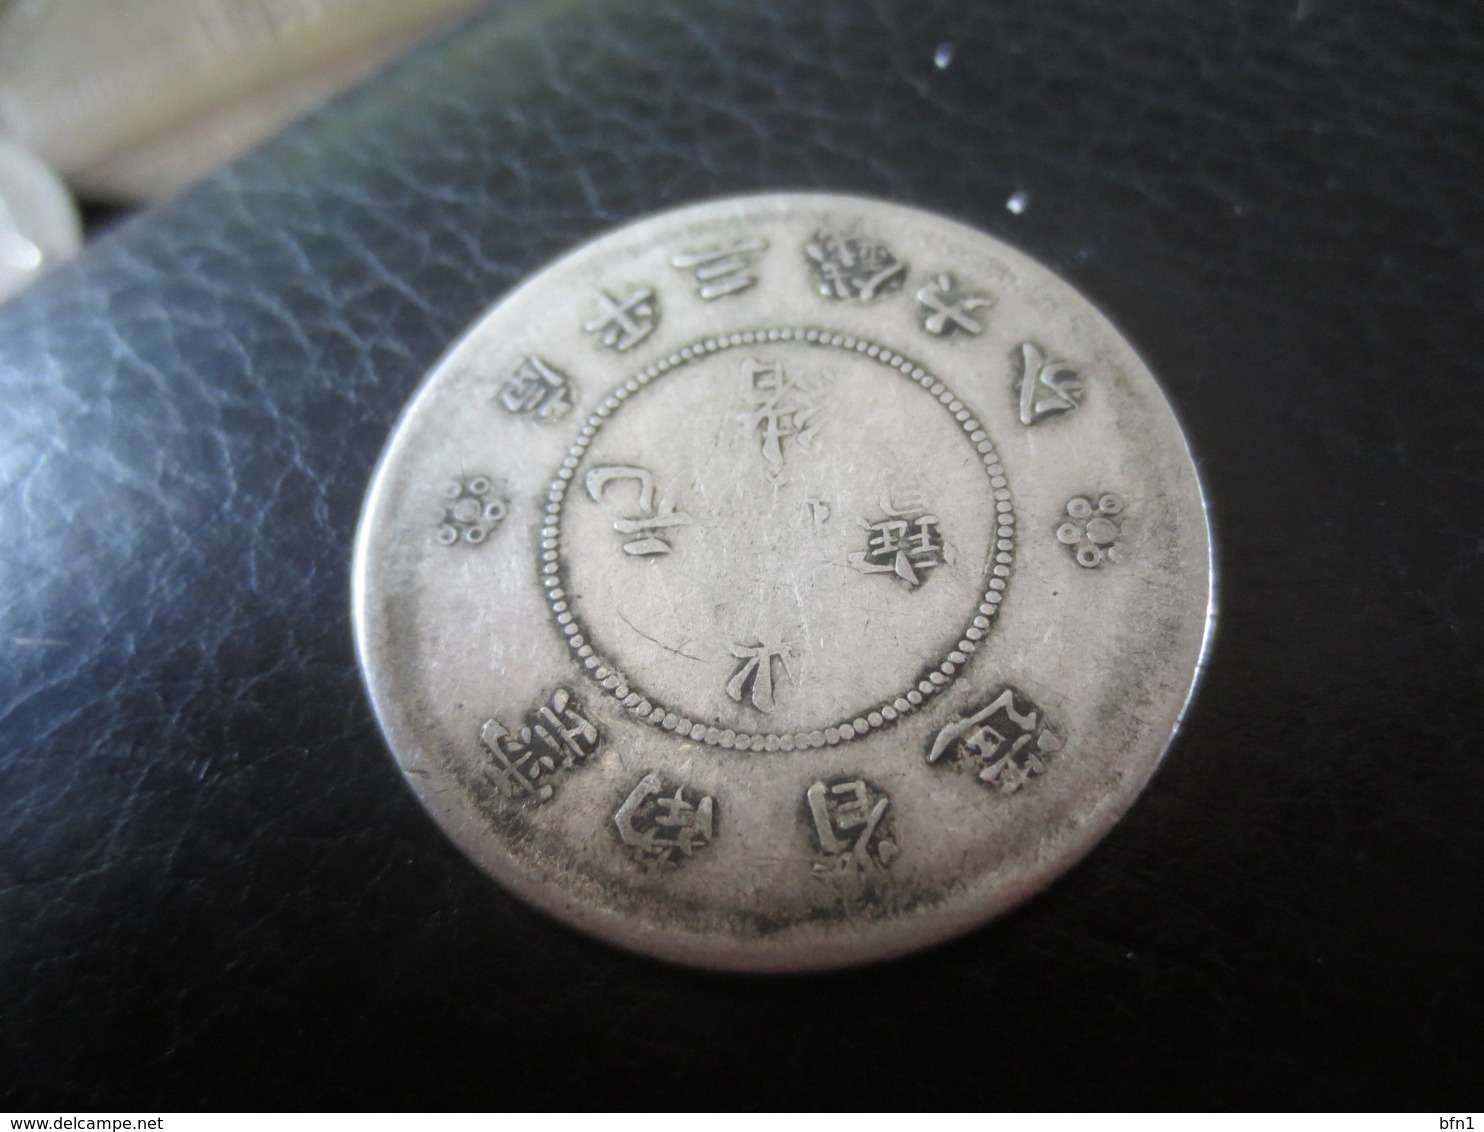 RARE - ARGENT - China Coin - PROVINCE DE YUNNAN- 50 Cents - China